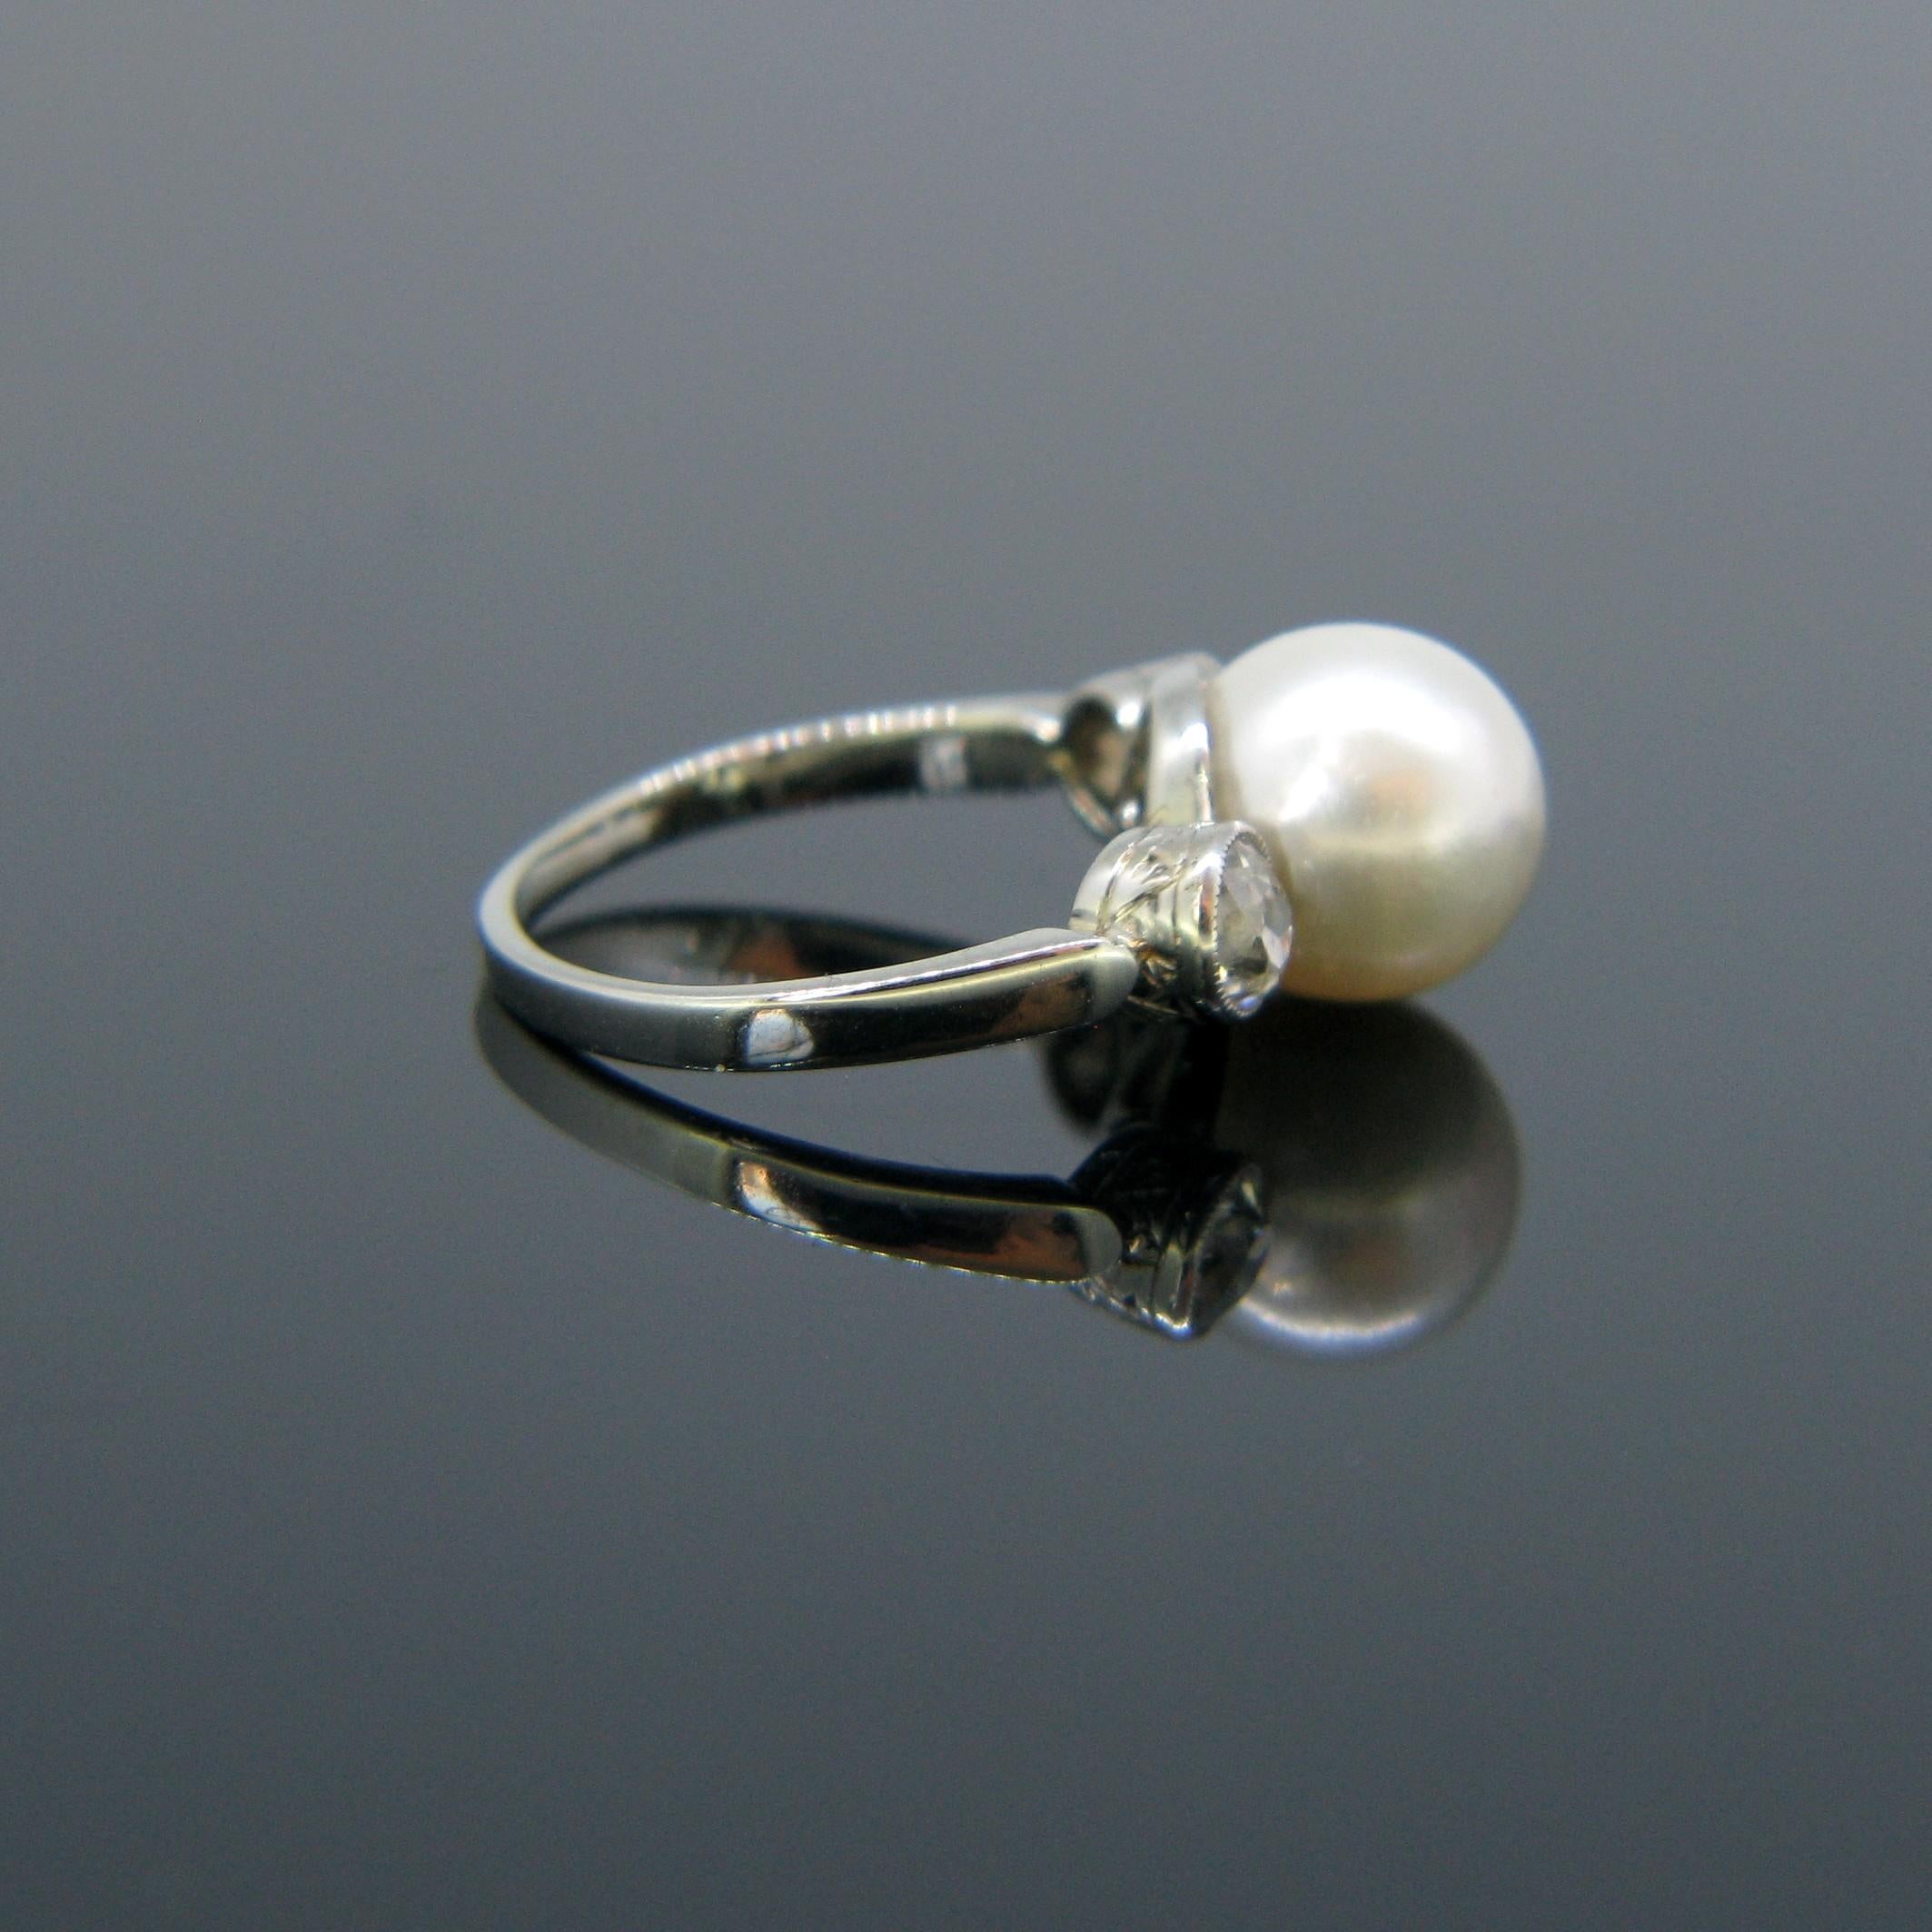 Edwardian Art Deco Cultured Pearl and Diamonds Ring, Platinum, circa 1925